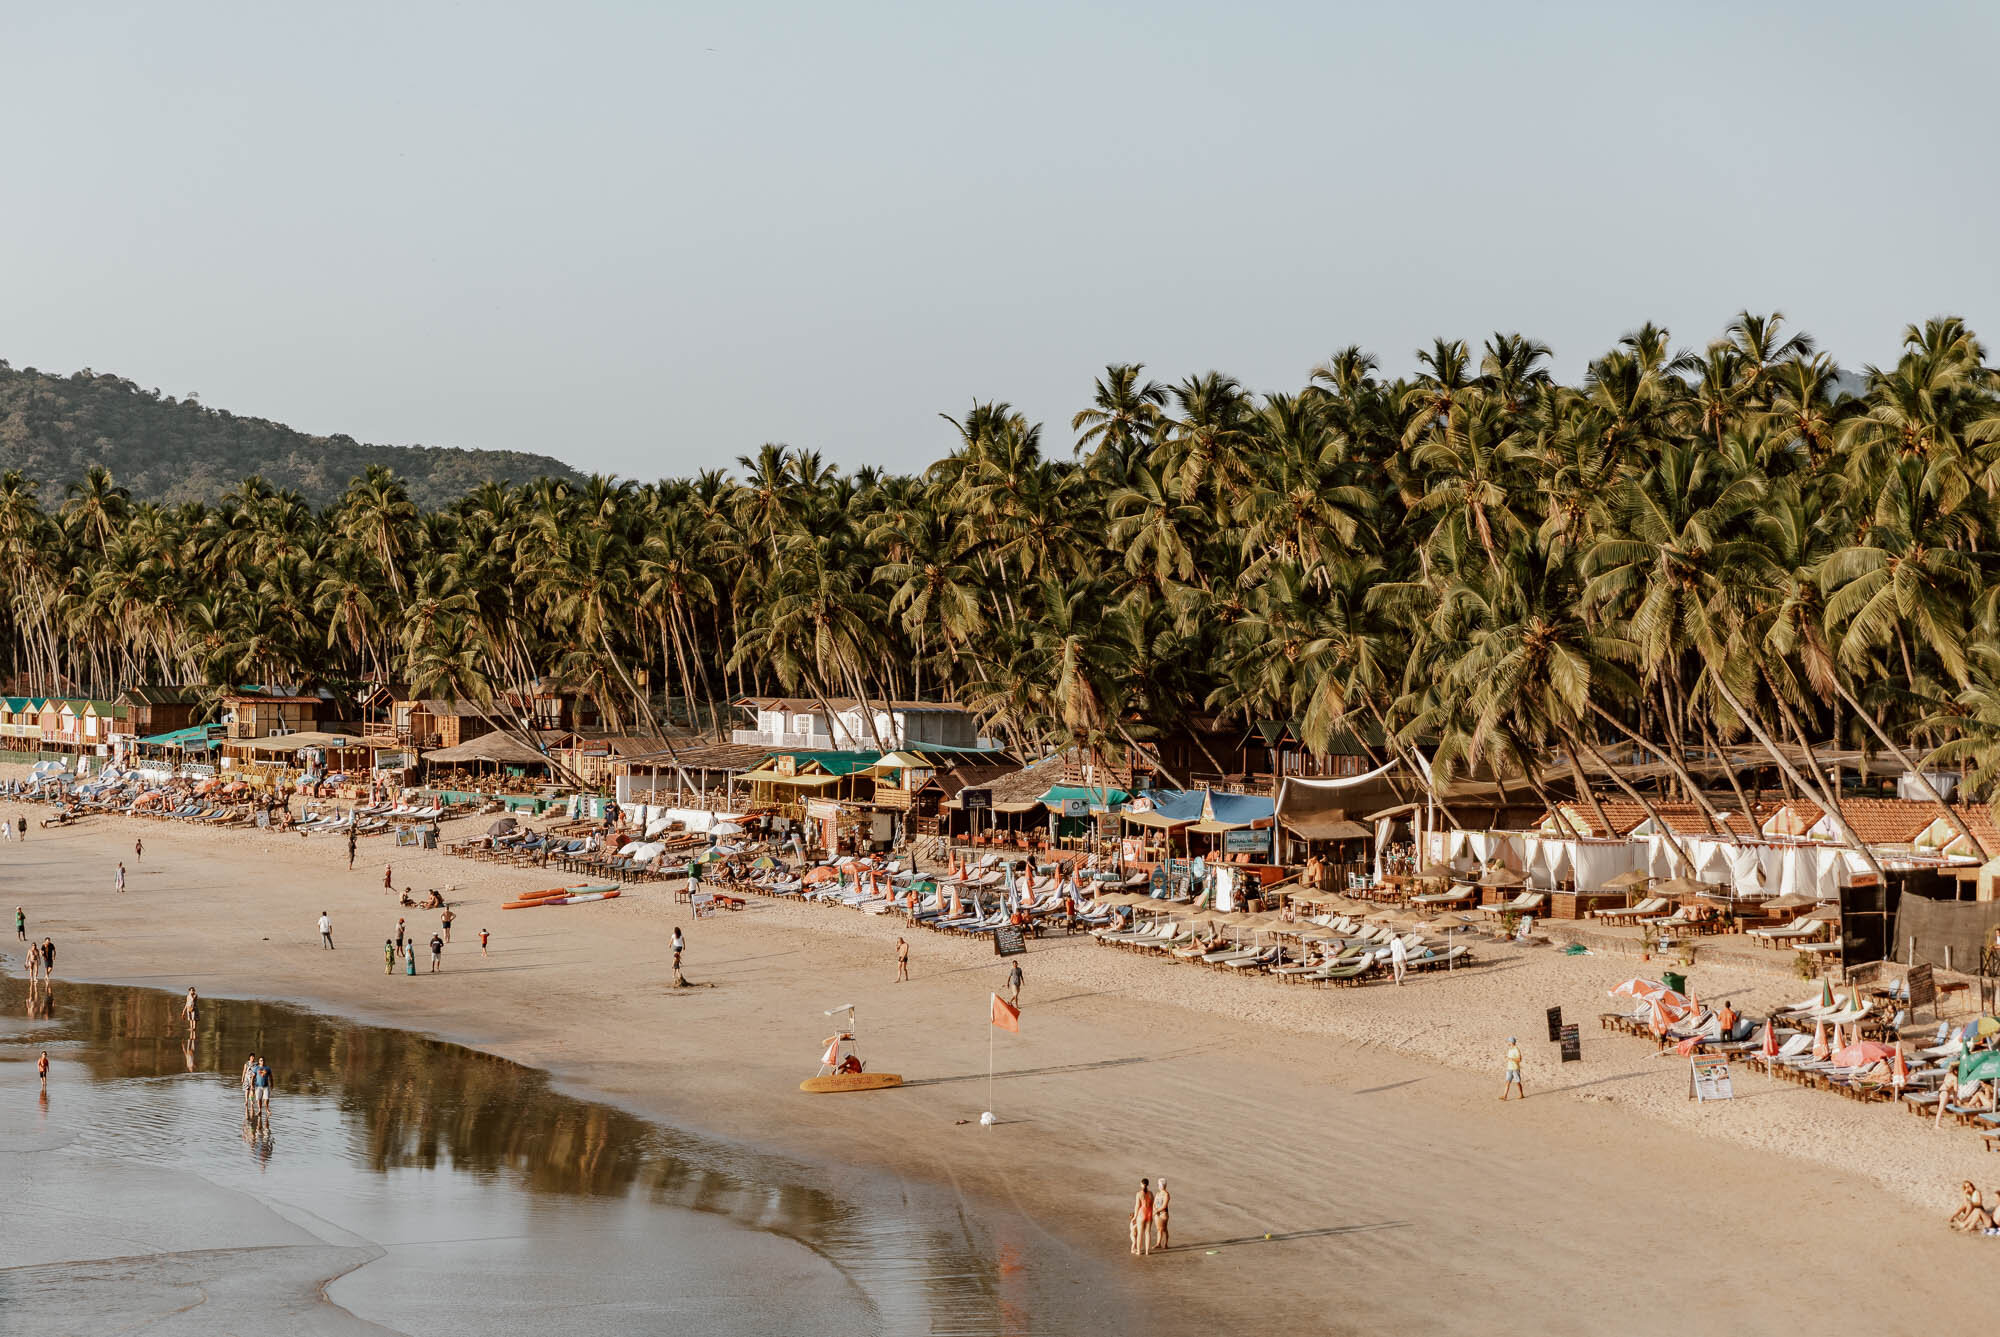 5 Best Beaches To Visit In Goa